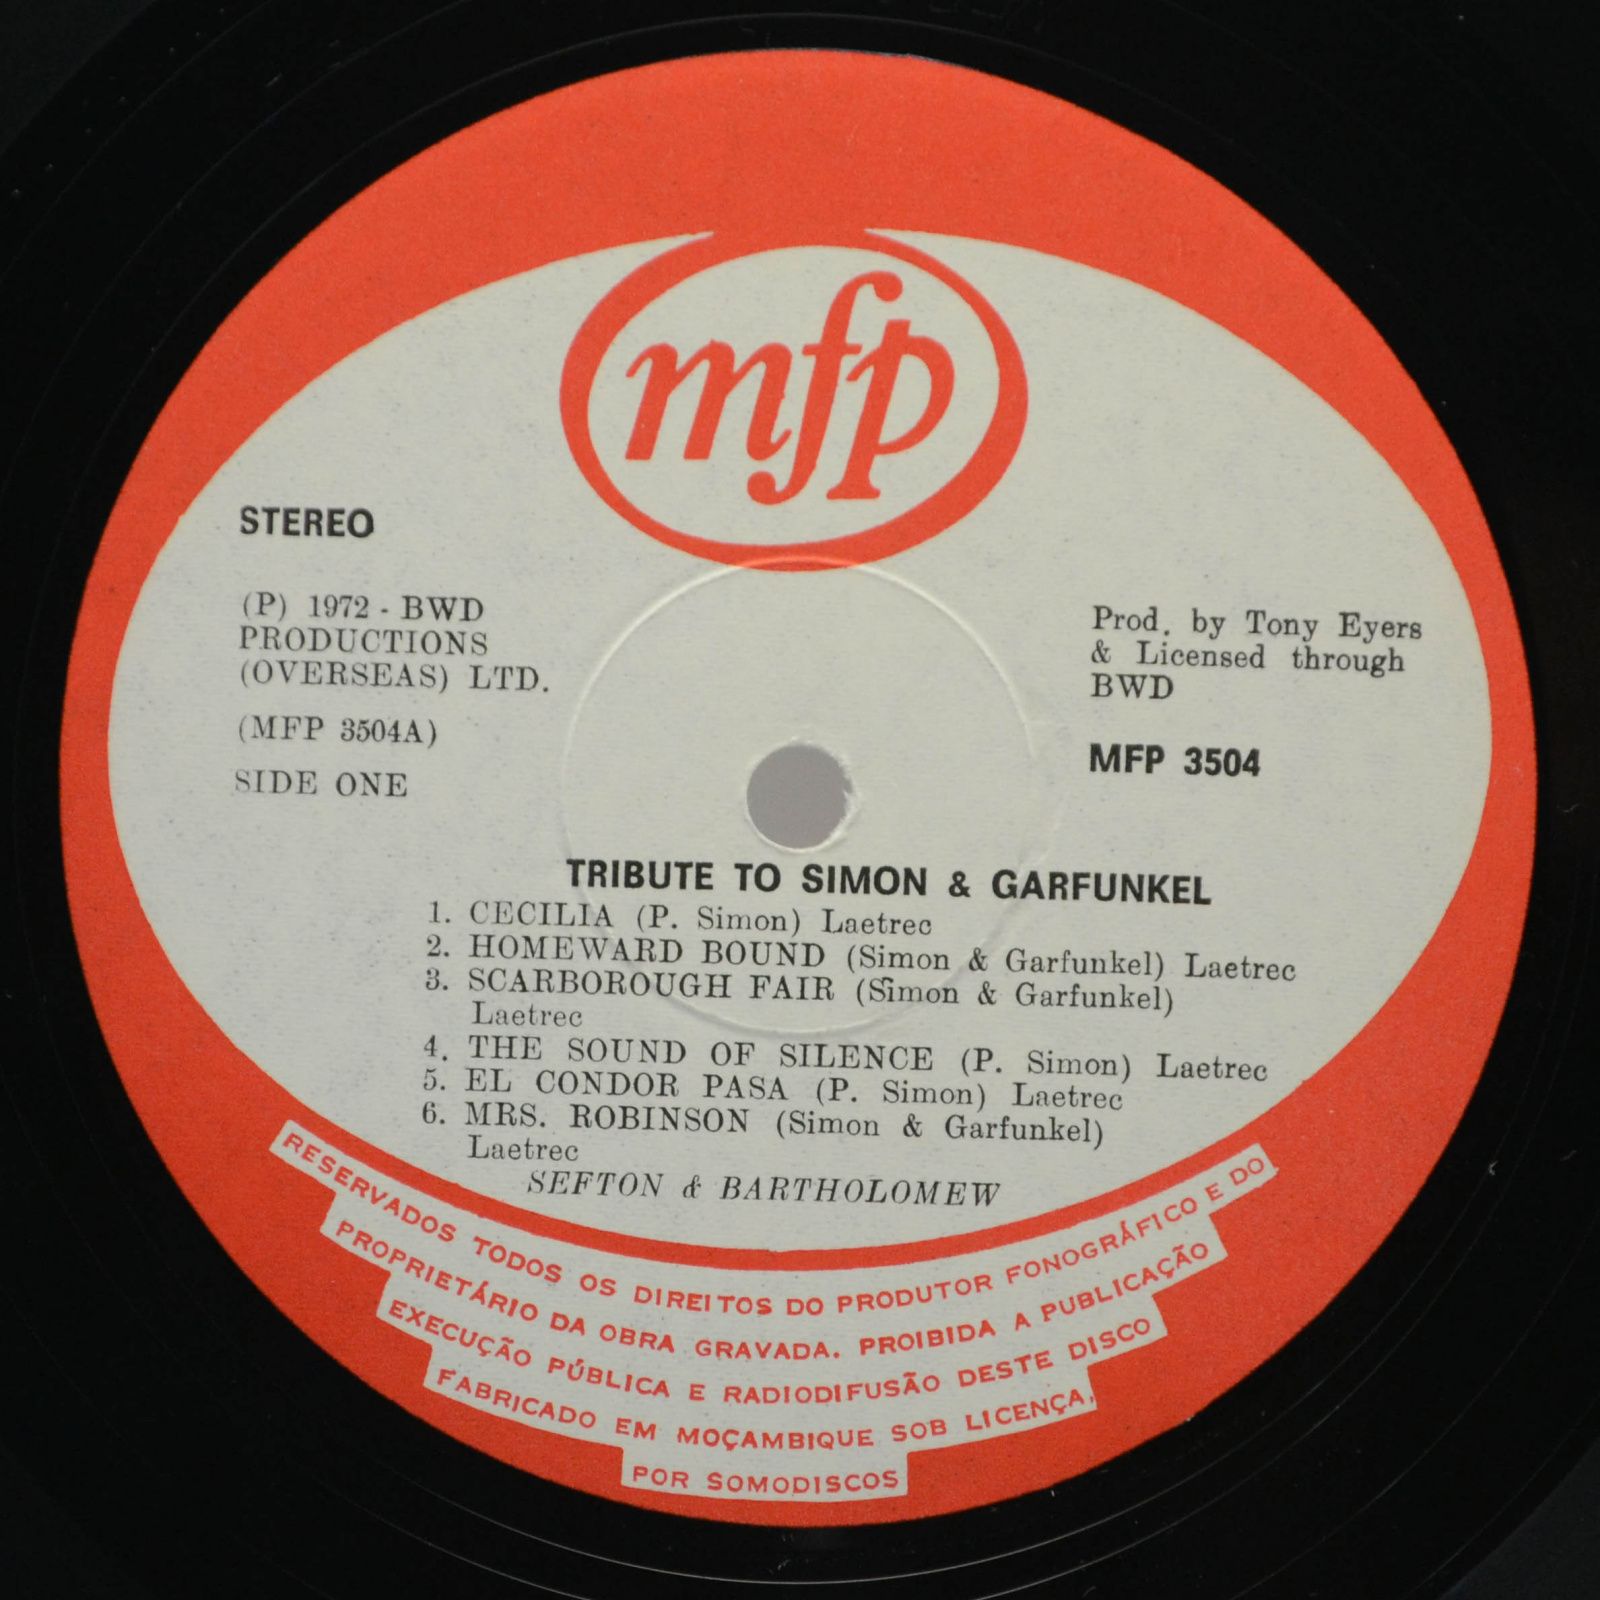 Sefton & Bartholomew — Simon & Garfunkel's Greatest Hits (Vocal), 1974